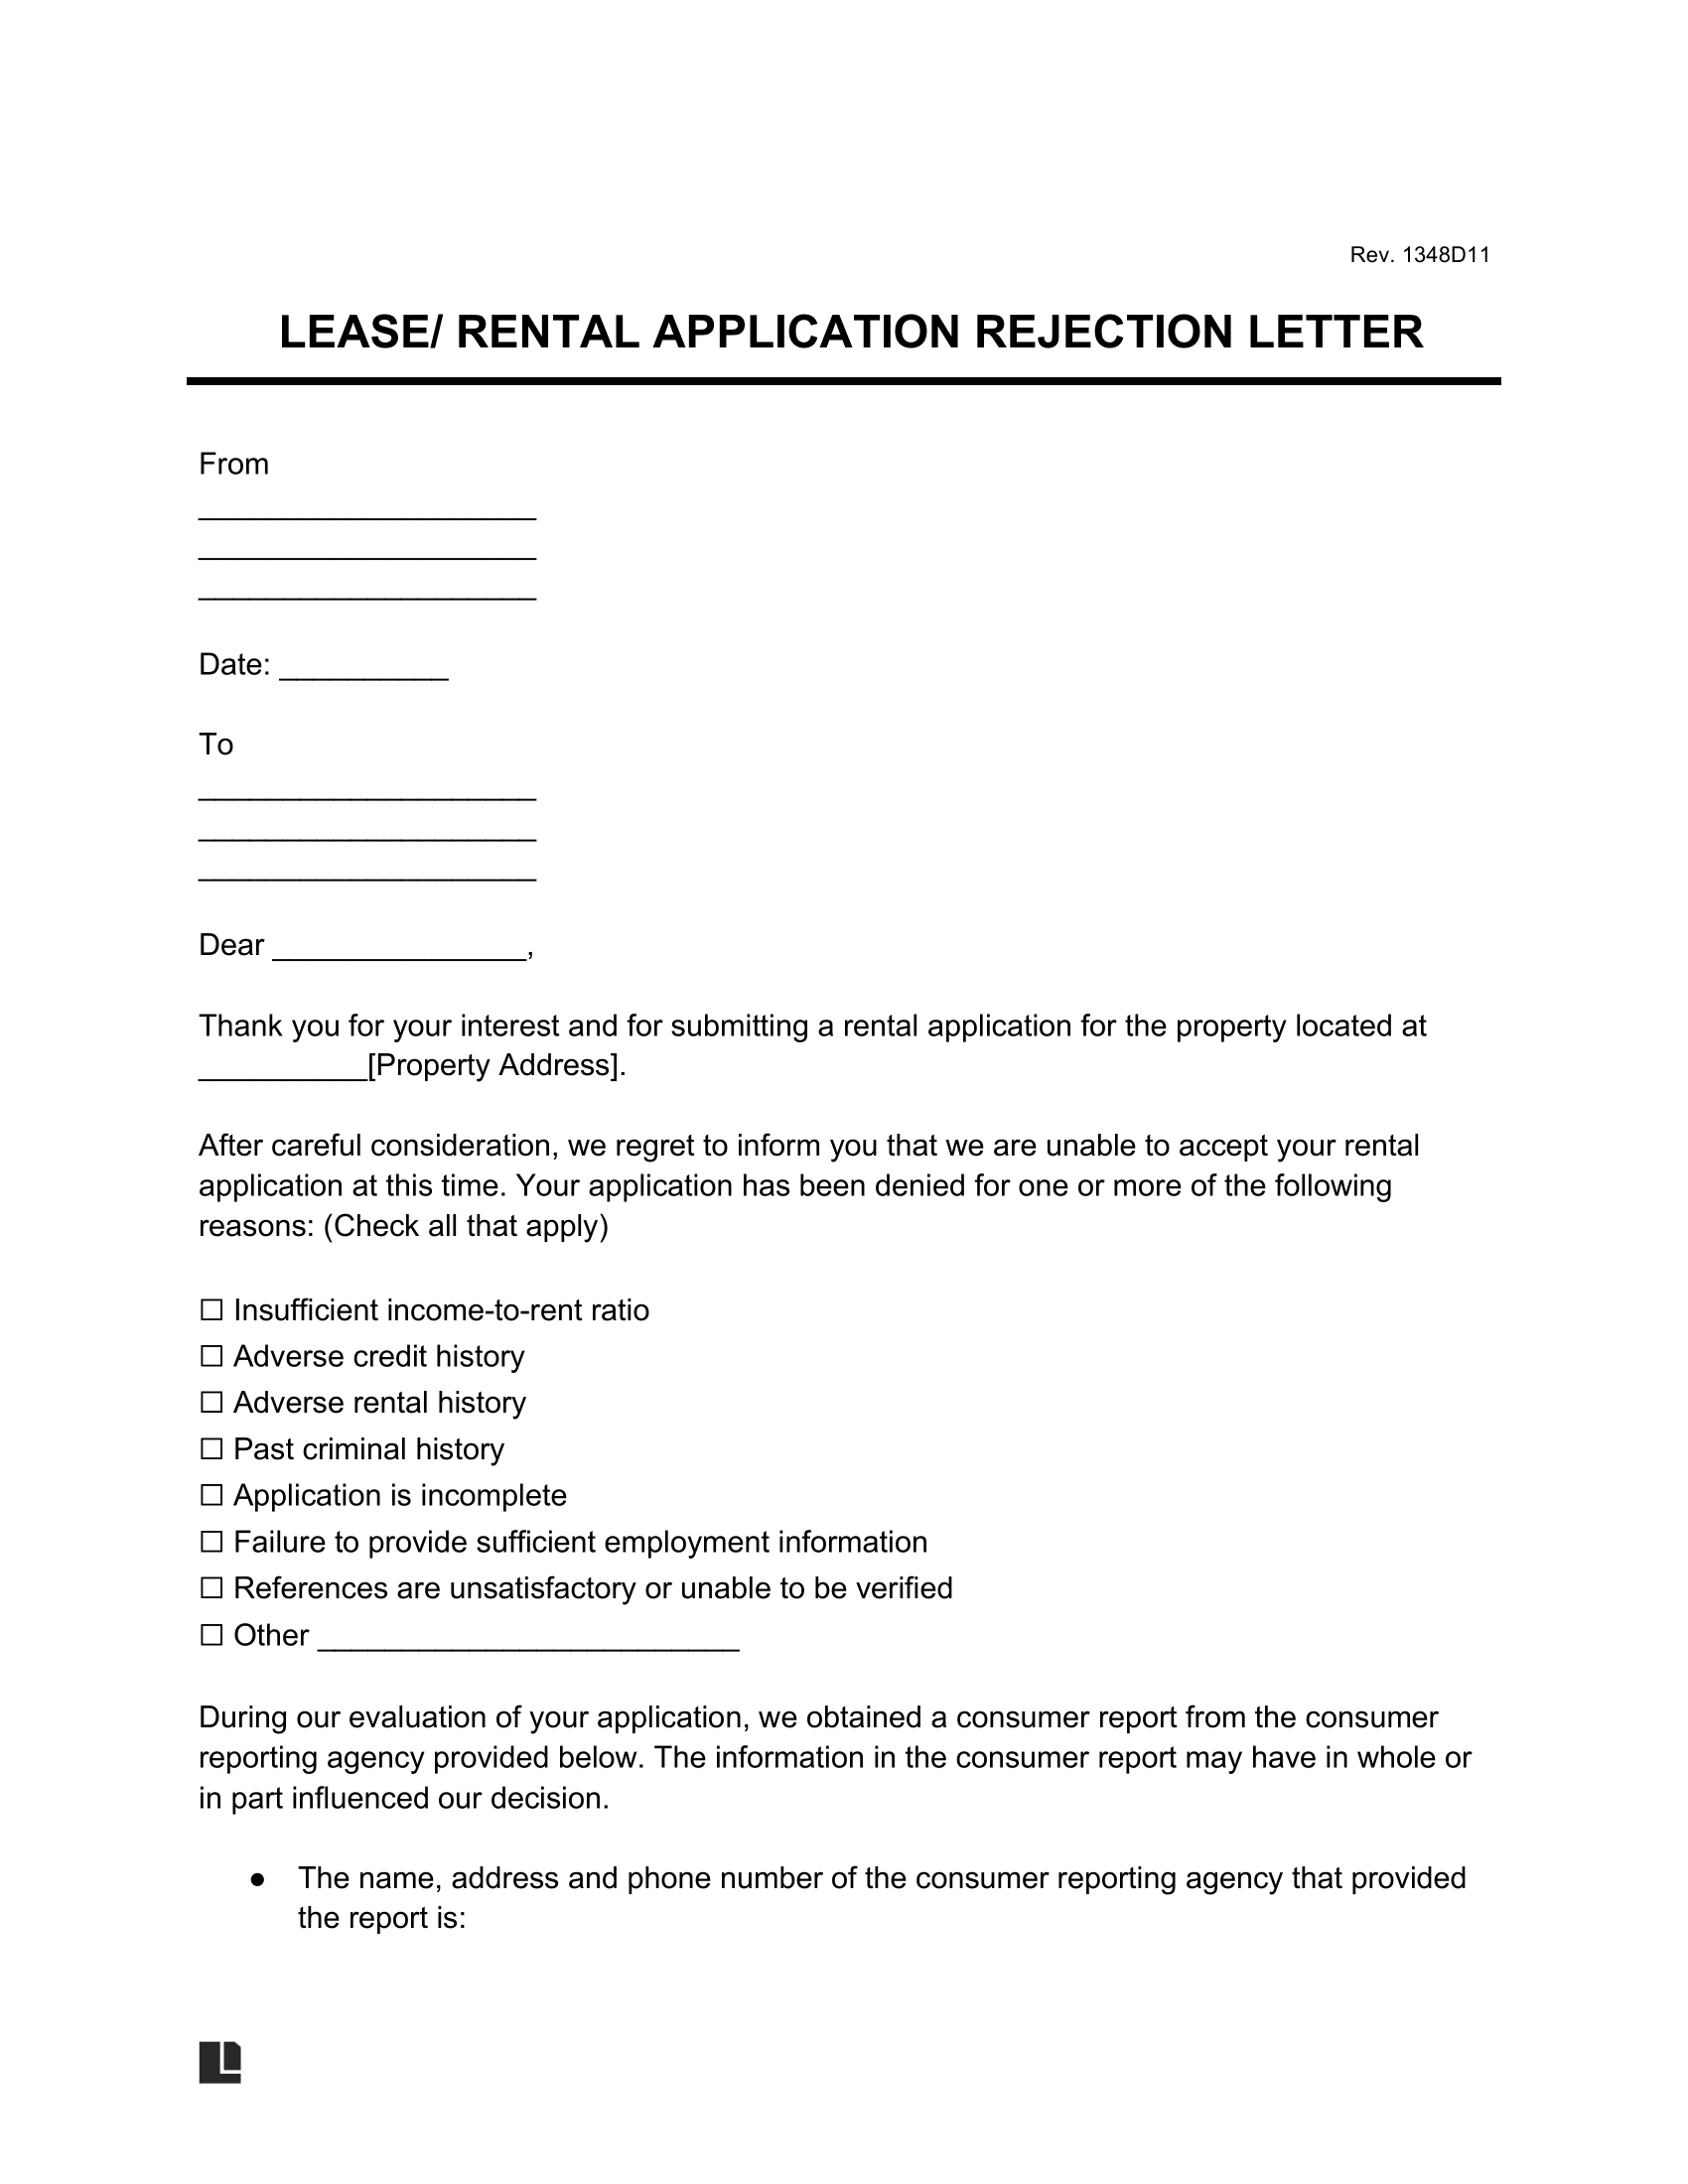 Free Rental Application Rejection Letter